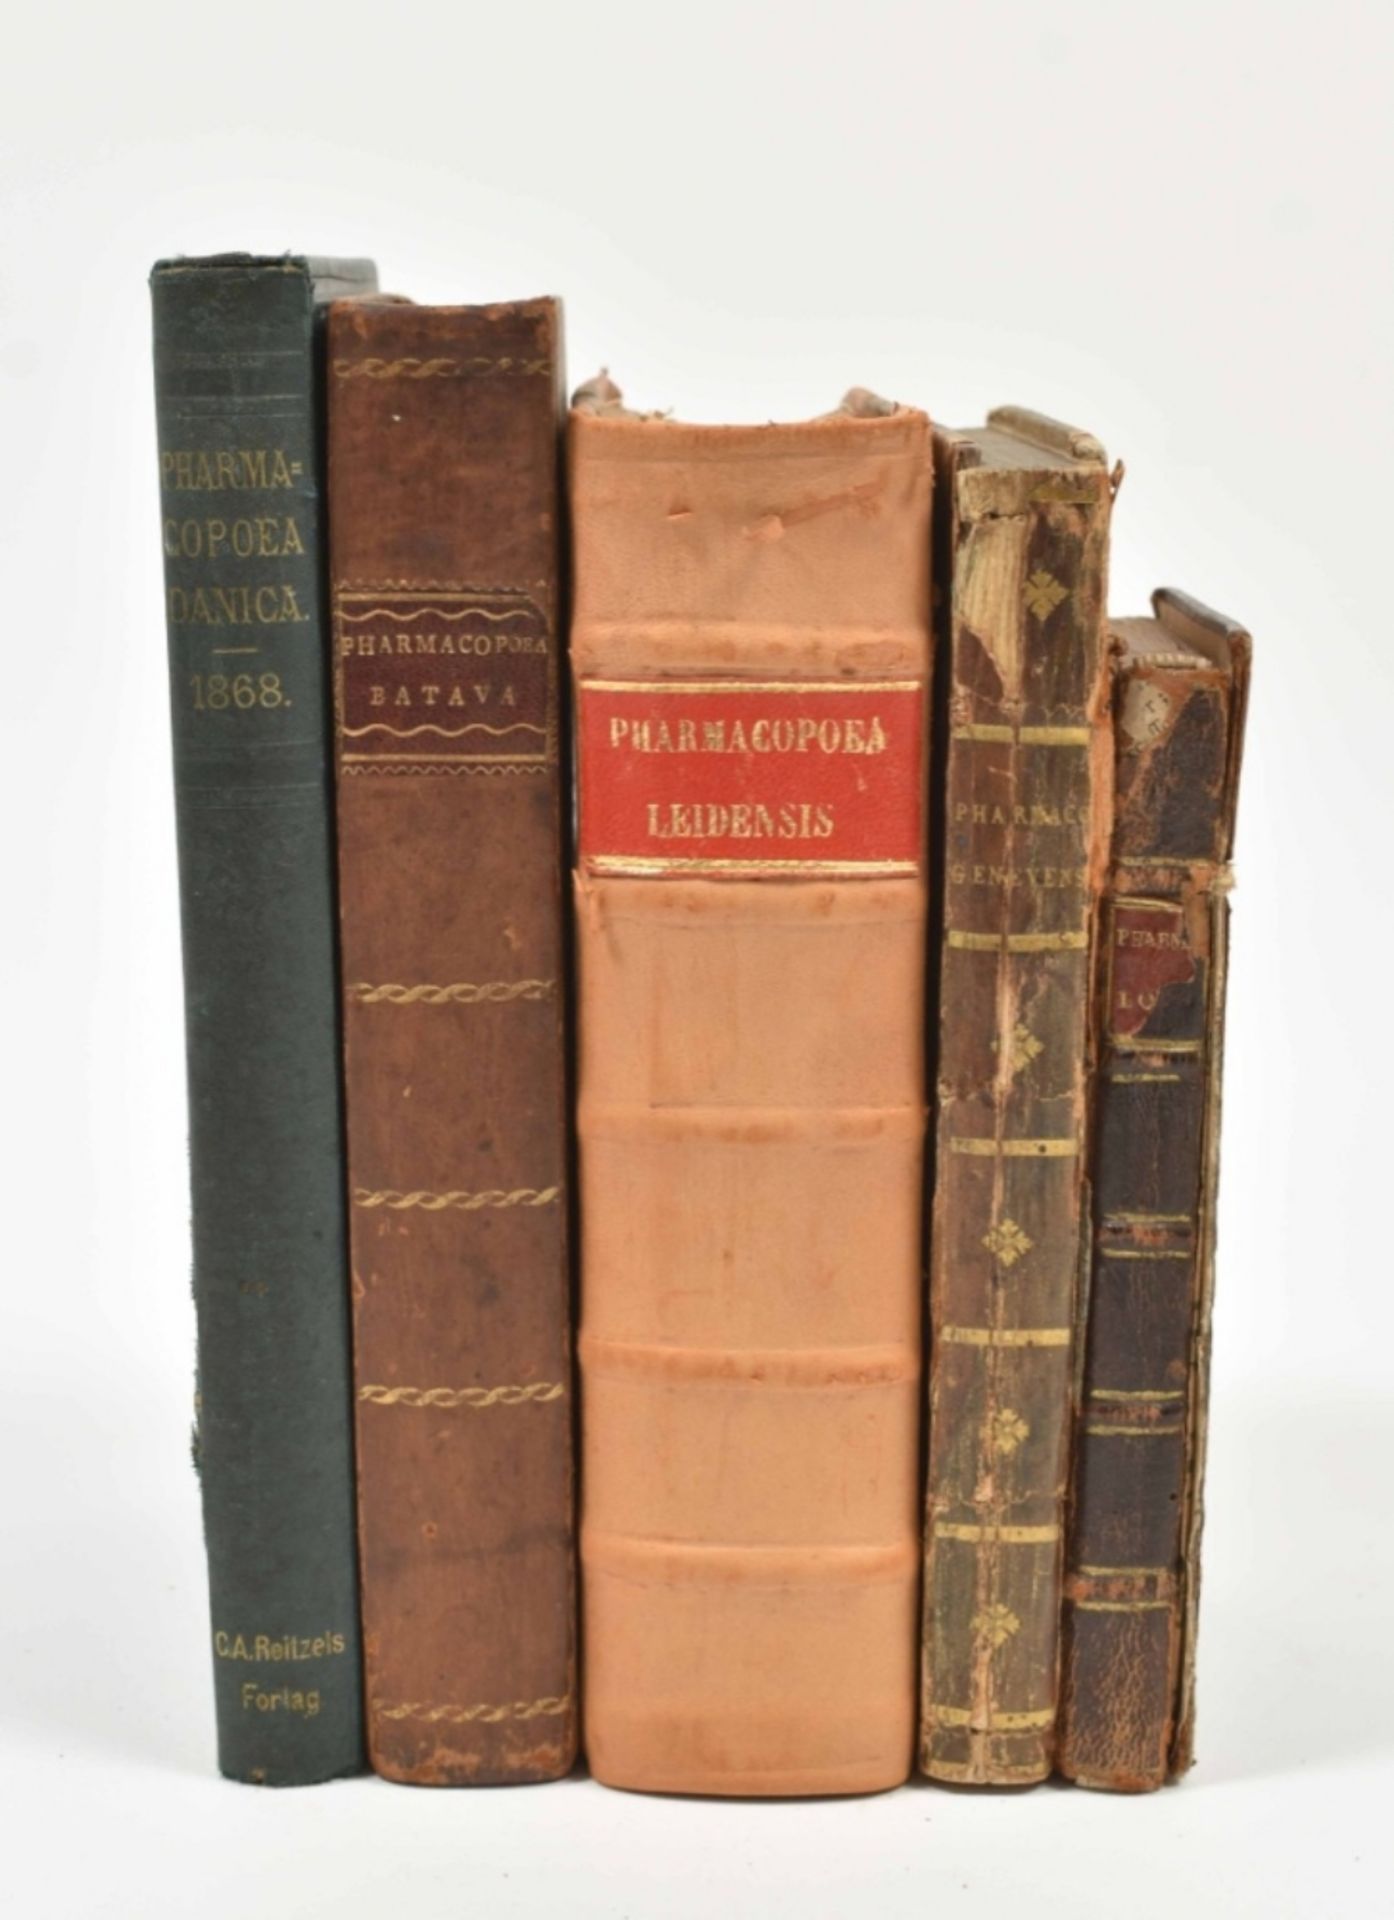 Five titles in Latin: Pharmacopoea Leidensis